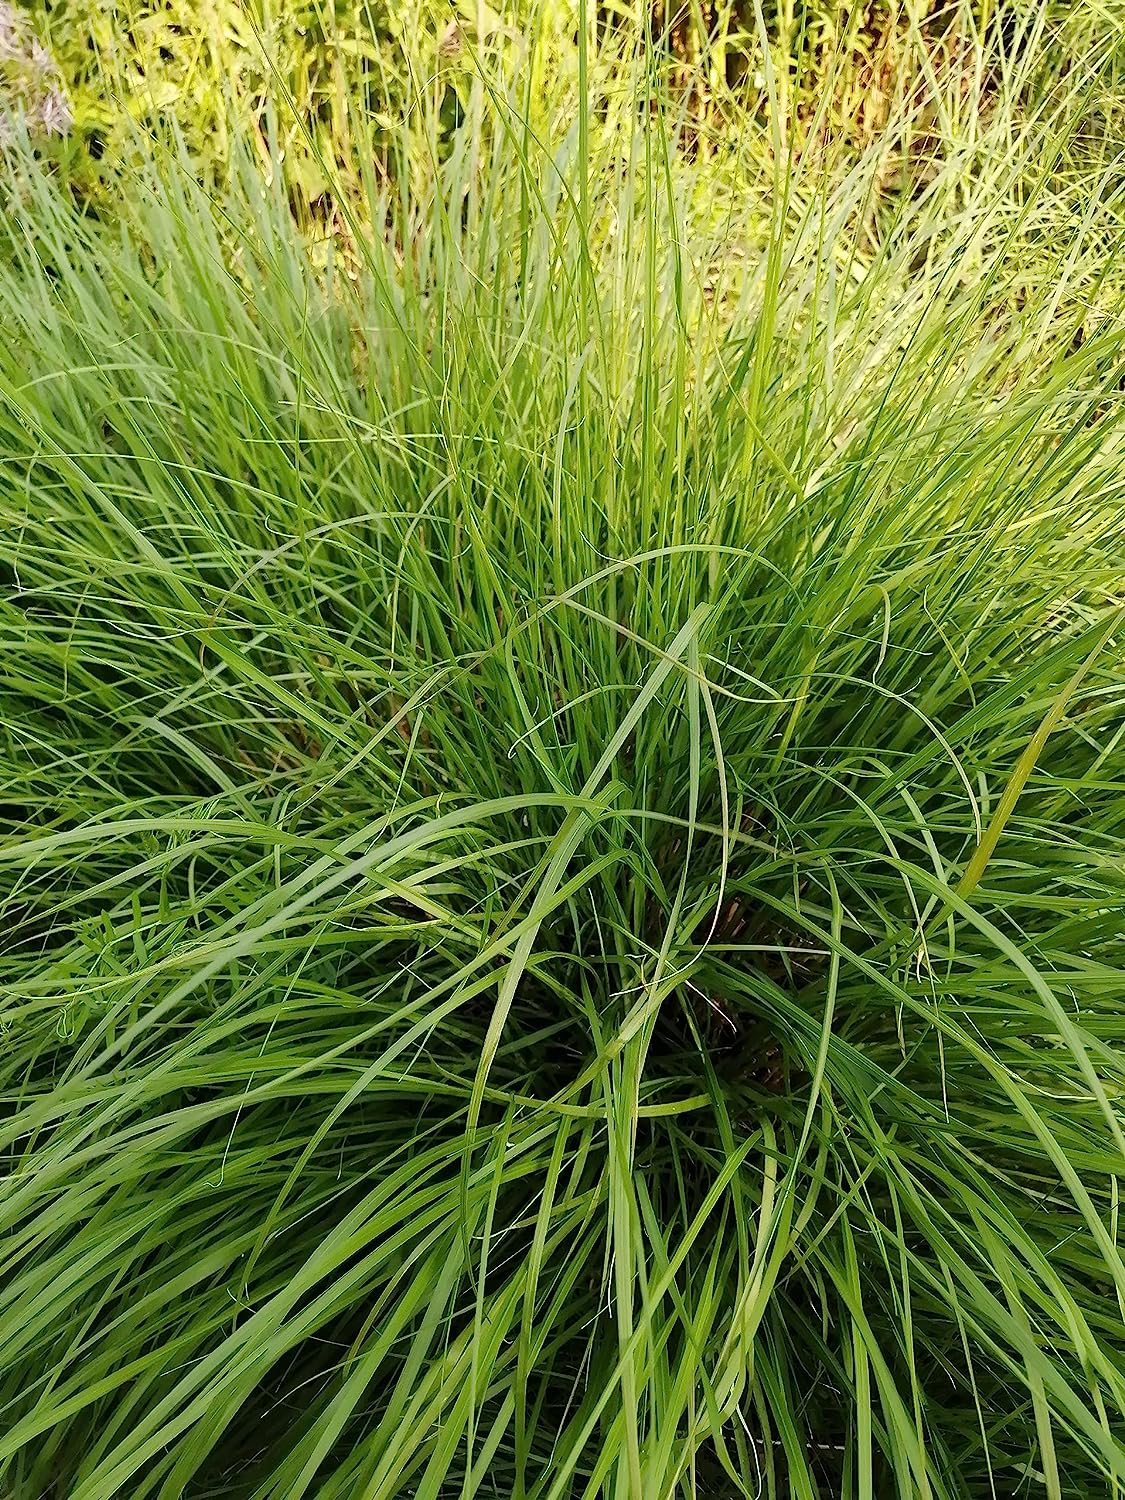 Hundredfold 500 Prairie Dropseed Grass Seeds - Sporobolus heterolepis Ornamental Bunch Grasses, Host Plant for Skipper Butterfly Larva, Valued for Native Garden & Wildflower Meadow